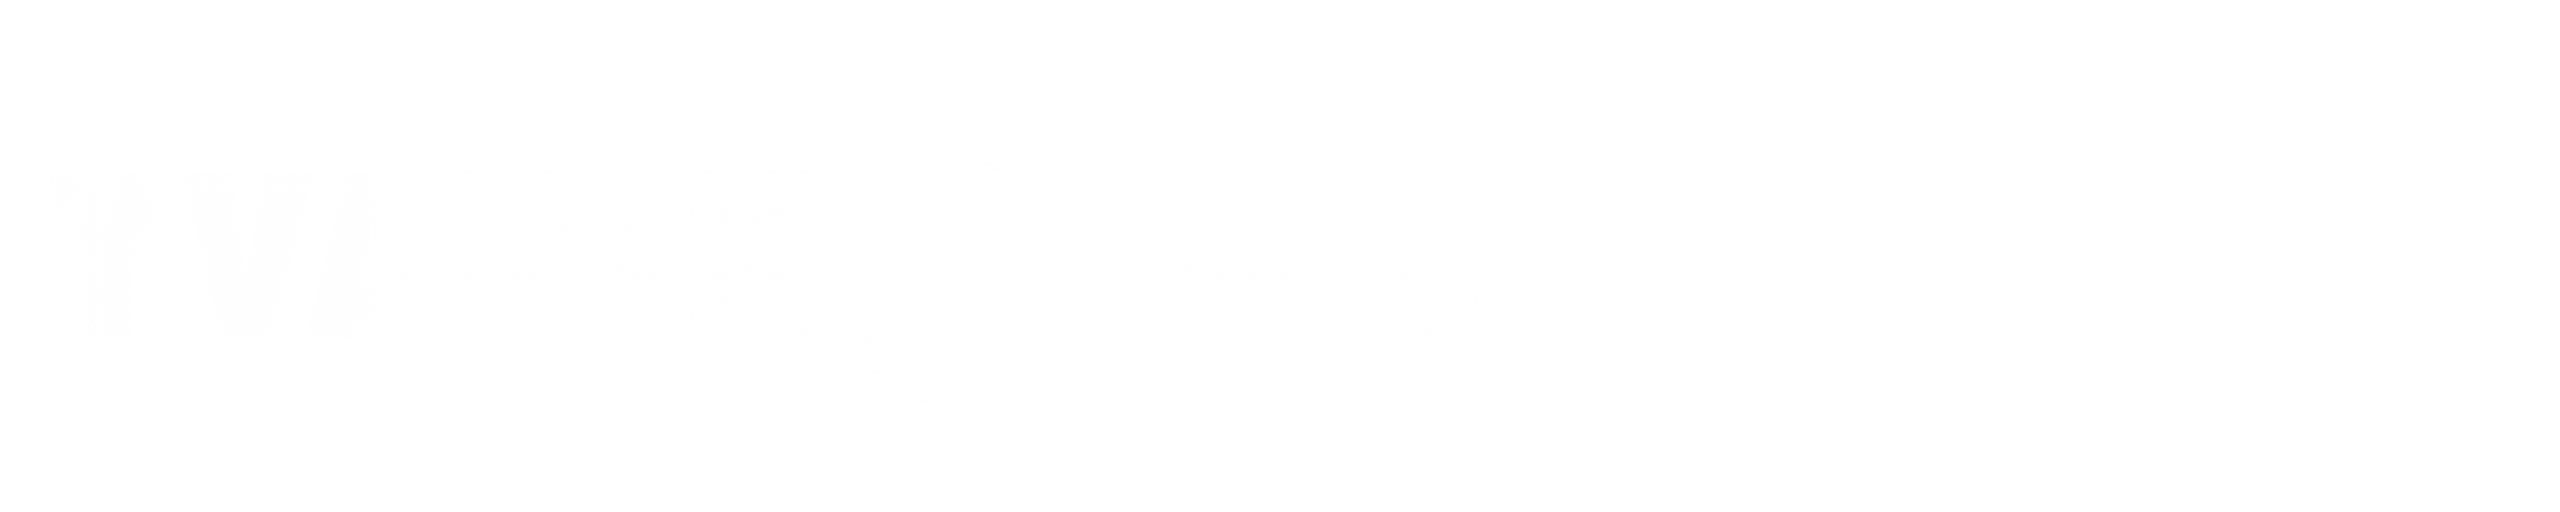 Logo Yvanik communication visuelle